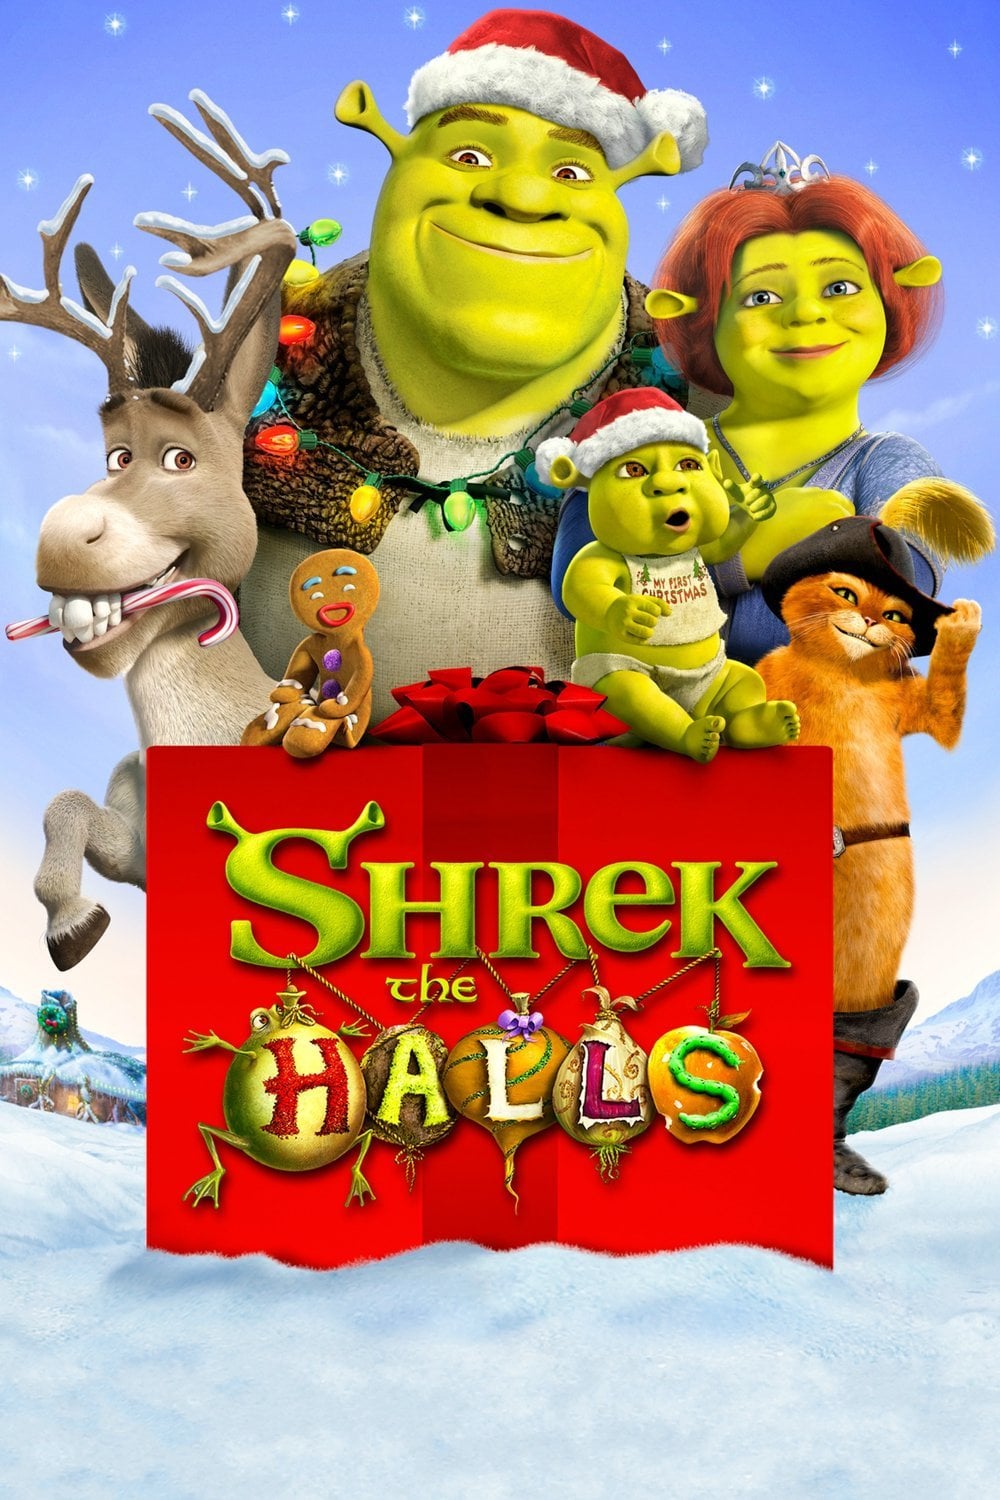 Poster for the movie "Shrek the Halls"